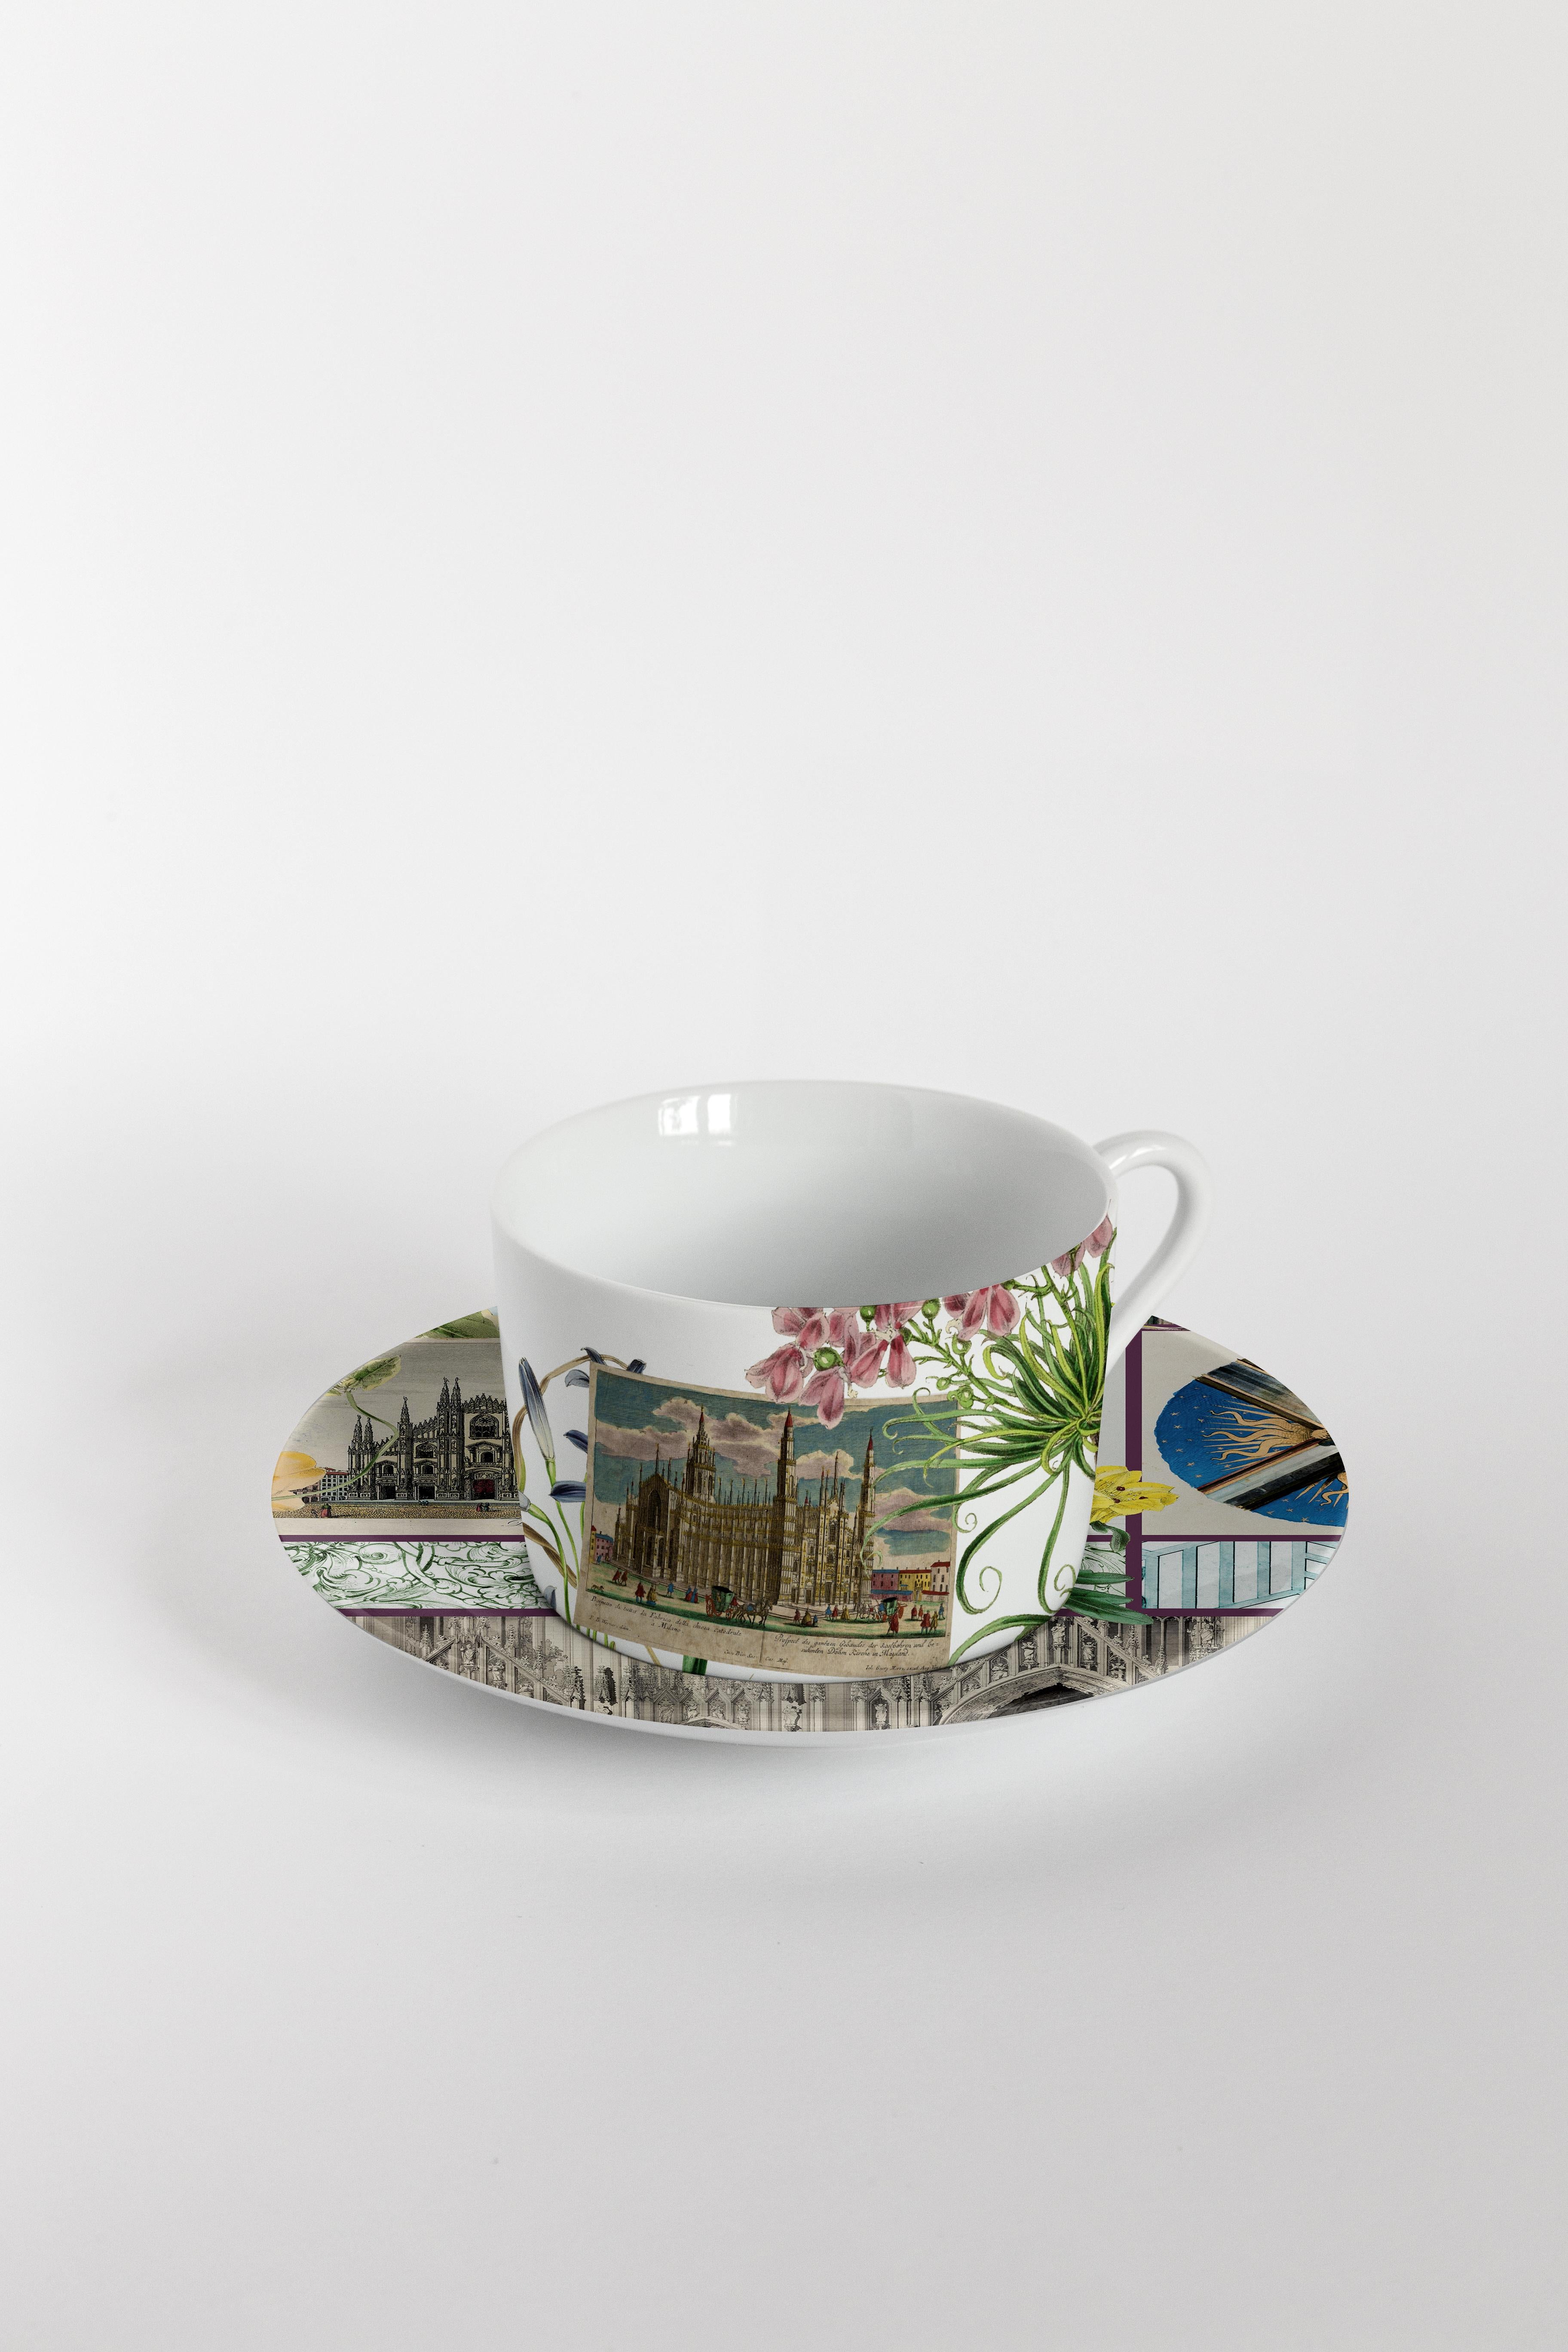 Italian La storia Infinita, Six Contemporary Decorated Tea Cups with Plates For Sale